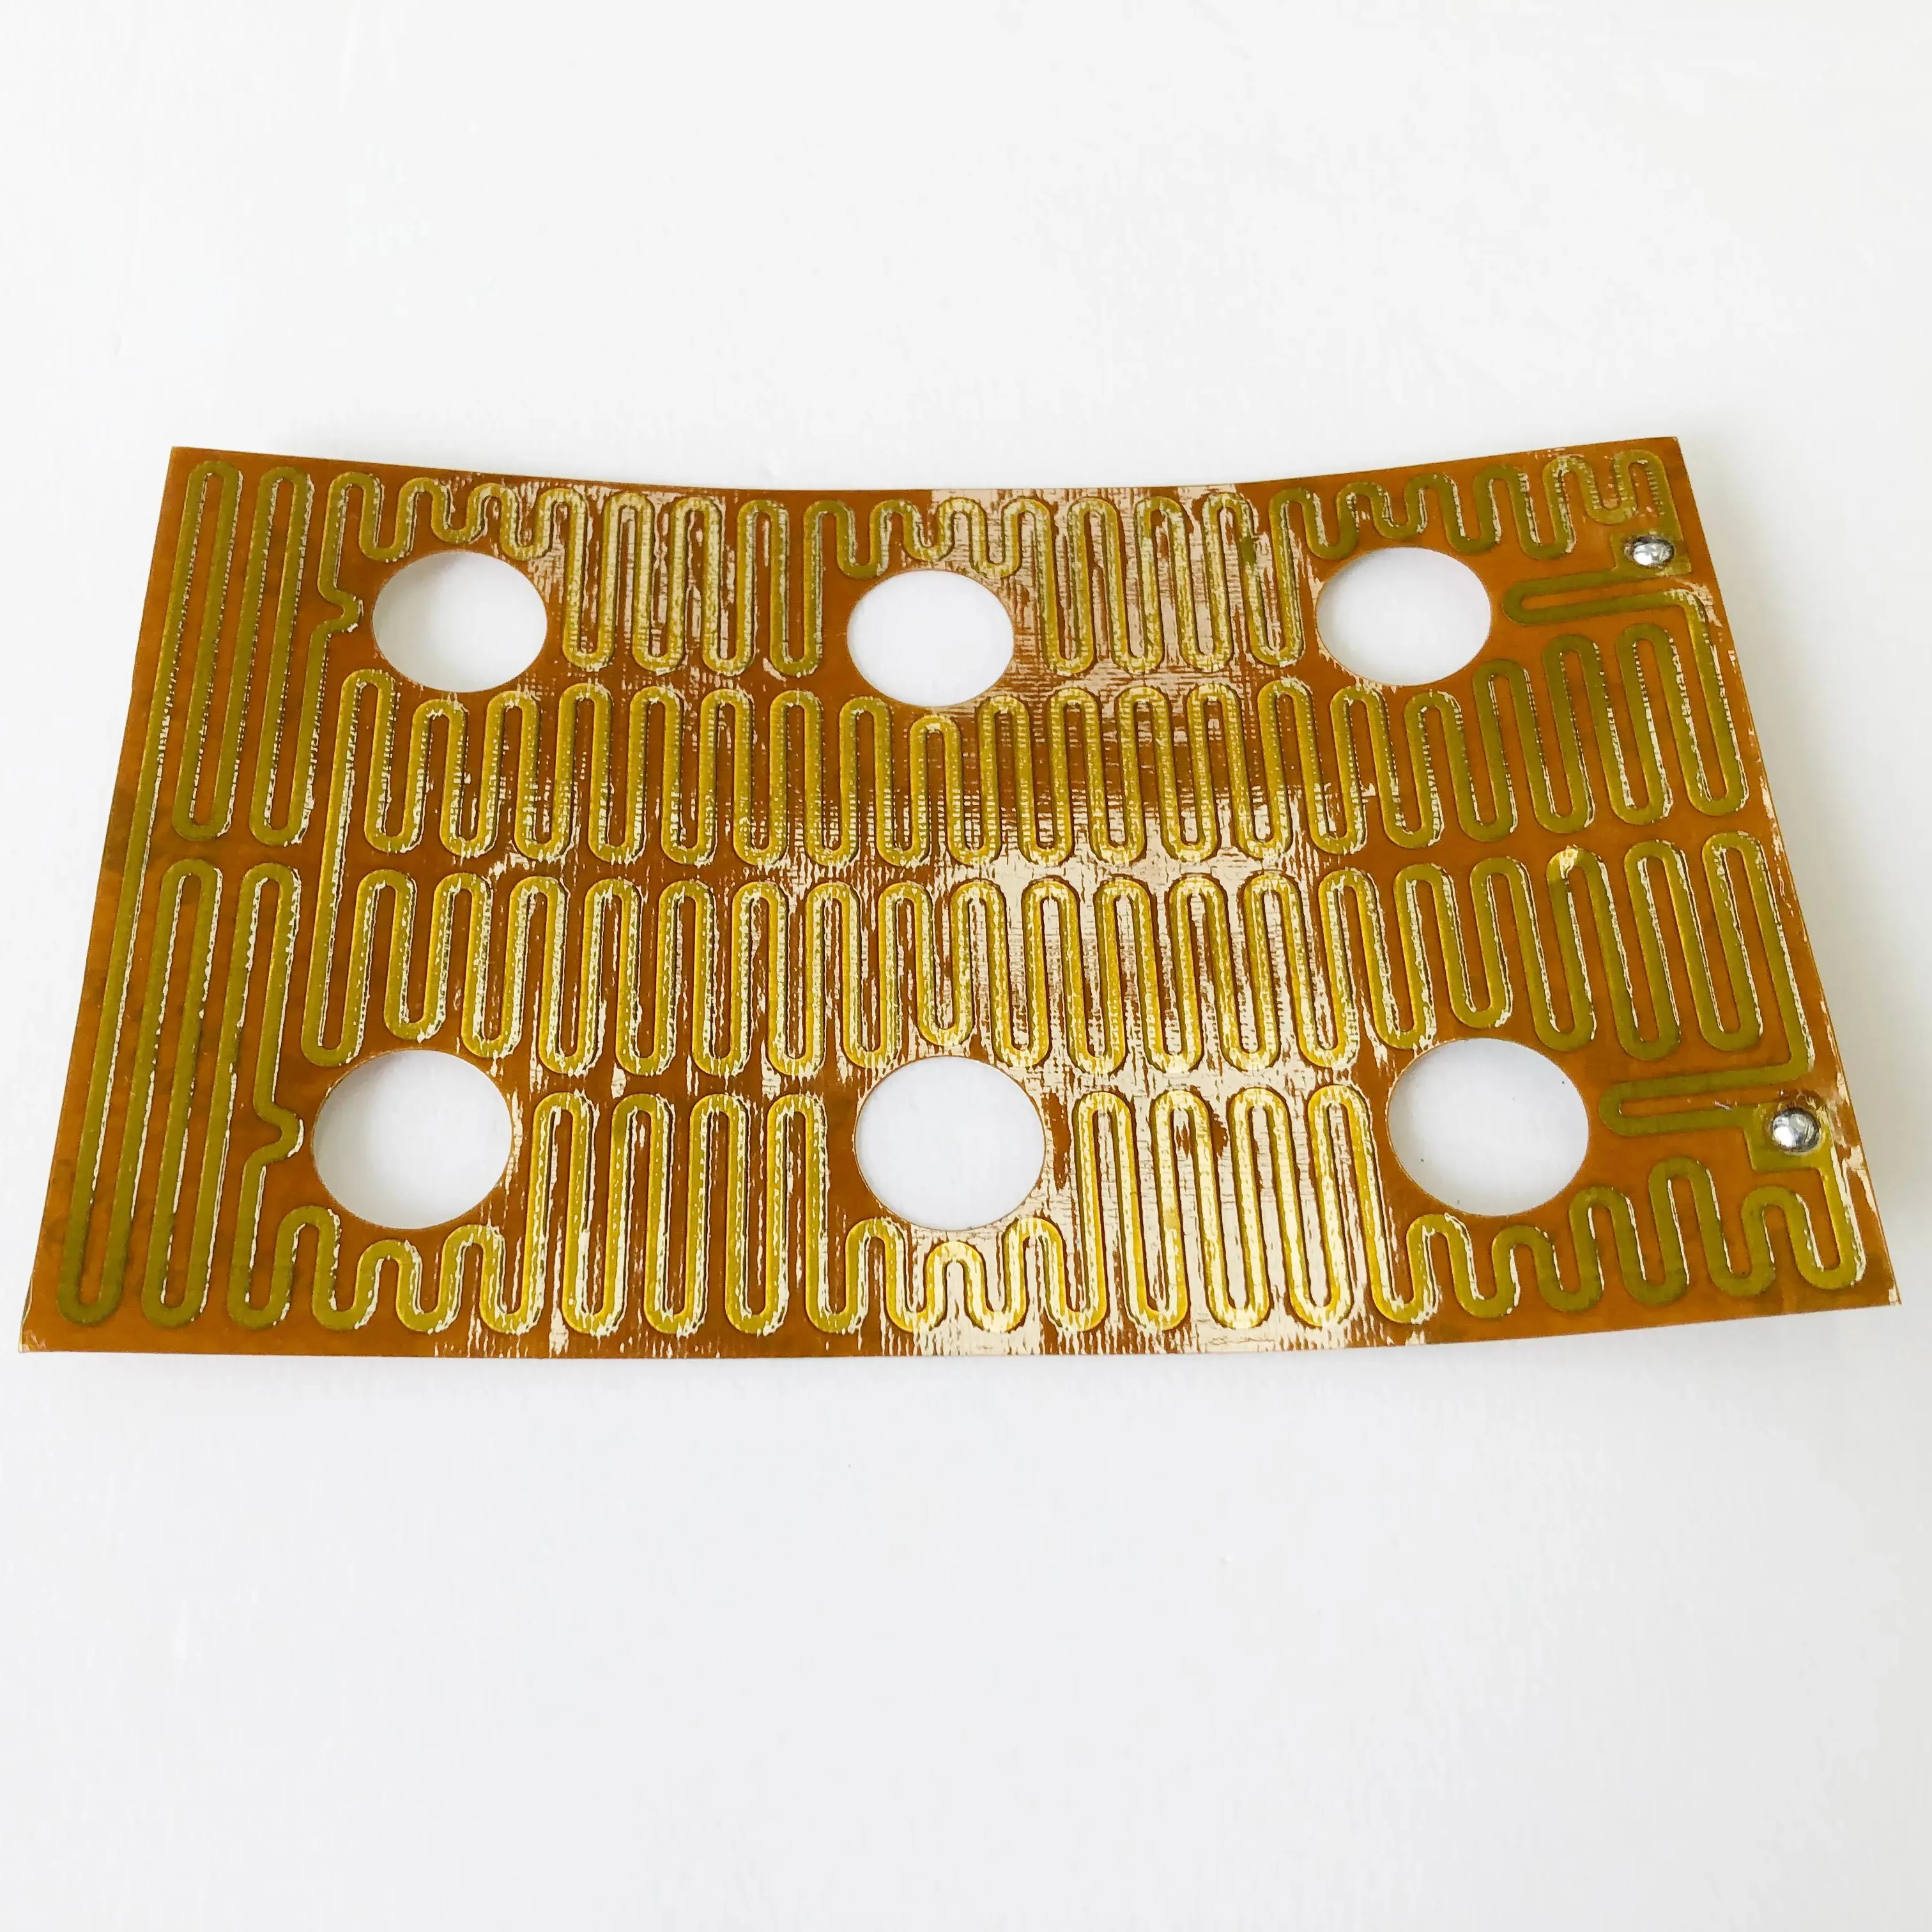 110V 220V adhesive etched foil flexible kapton polyimide thick film heating element